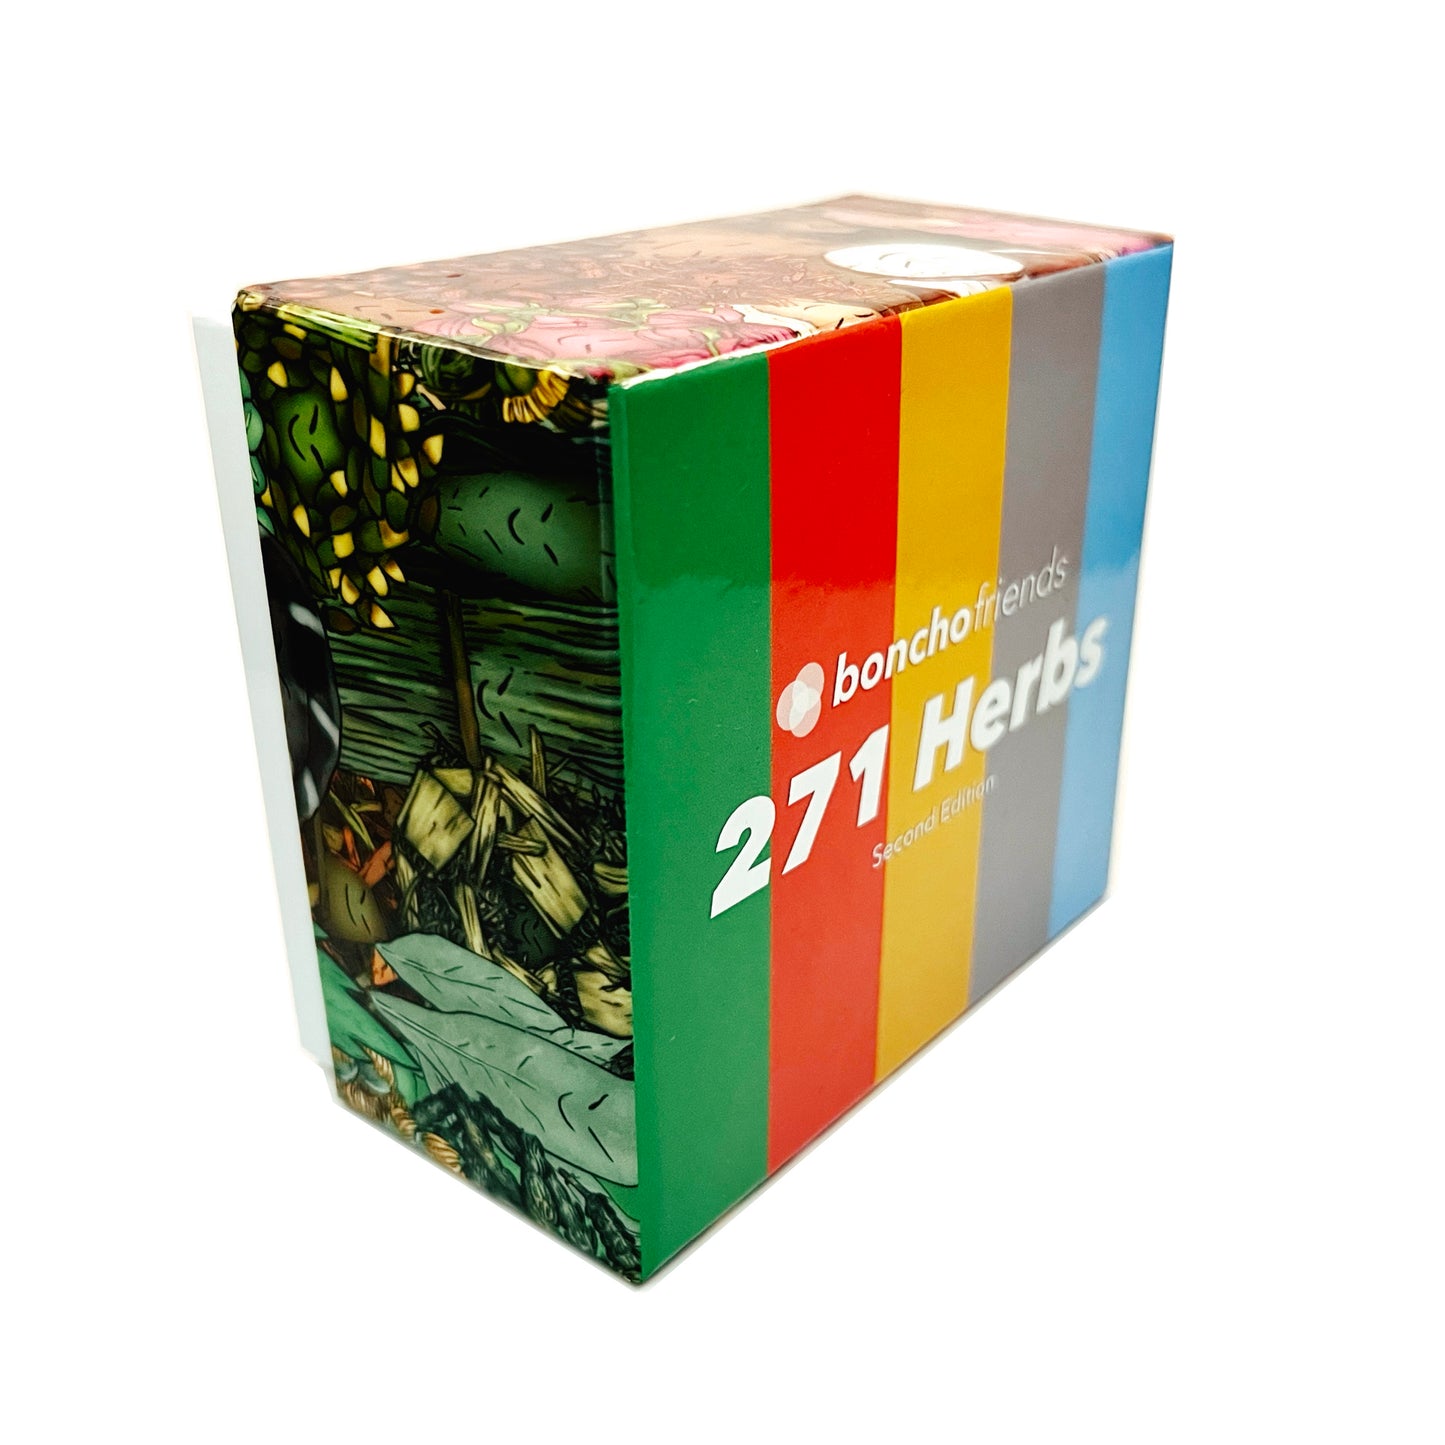 [Boncho Anniversary: 22% OFF] 271 Herbs Deck